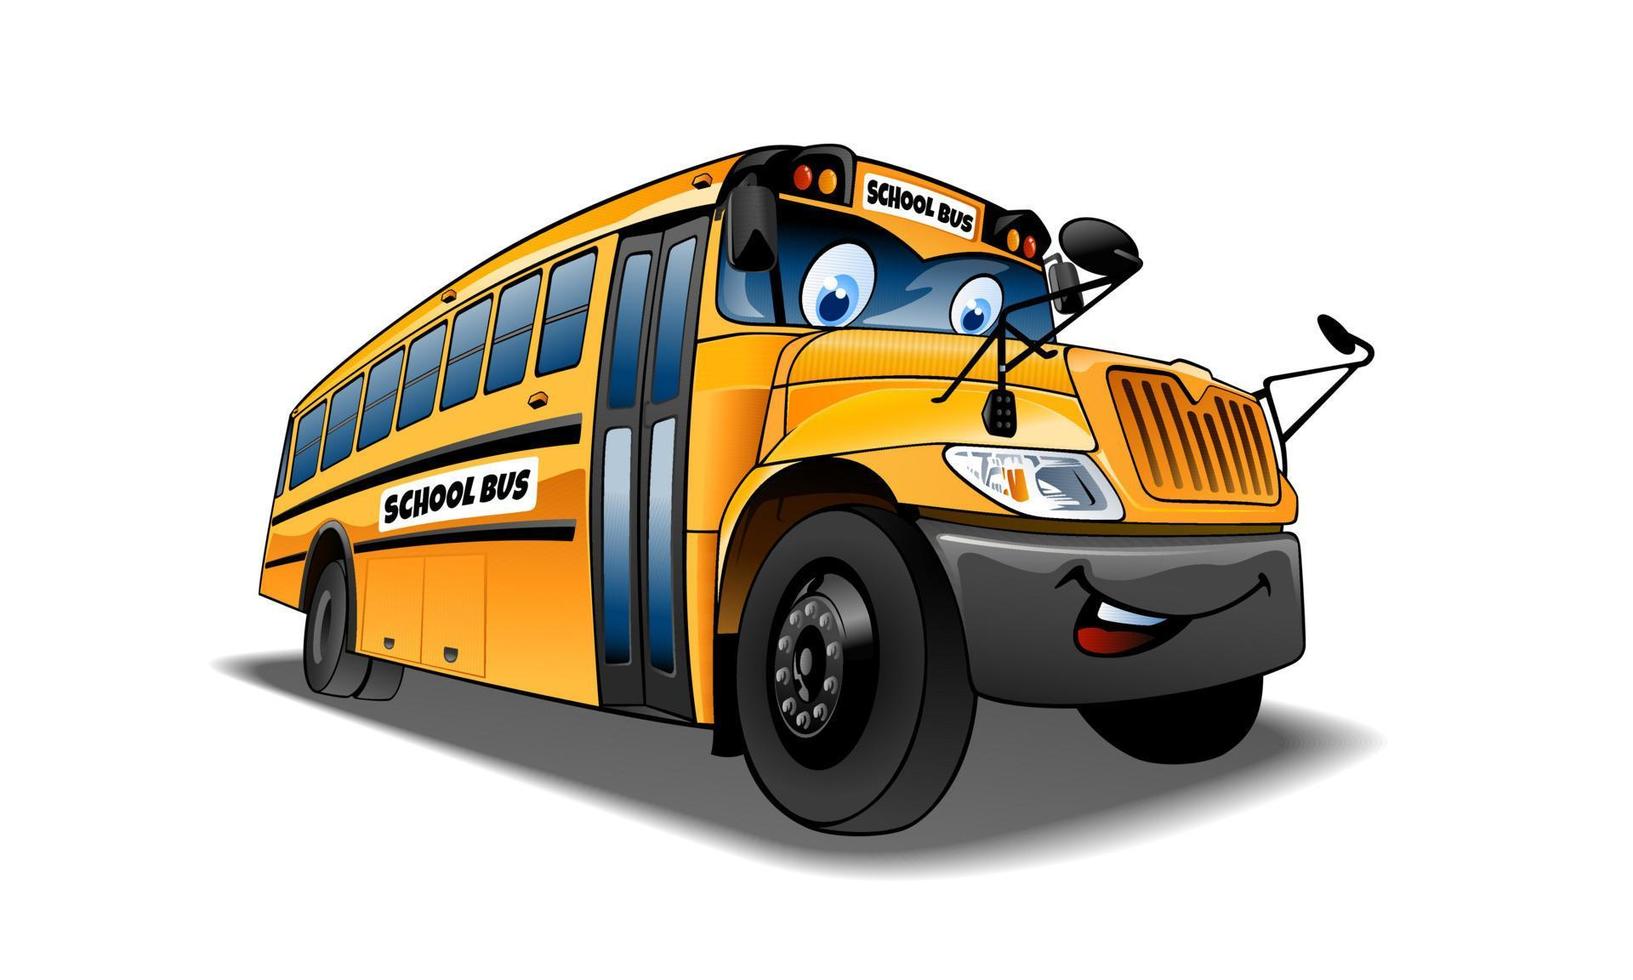 karikatur und vektor isolierter charakter. Vektor-Illustration eines Schulbusses.